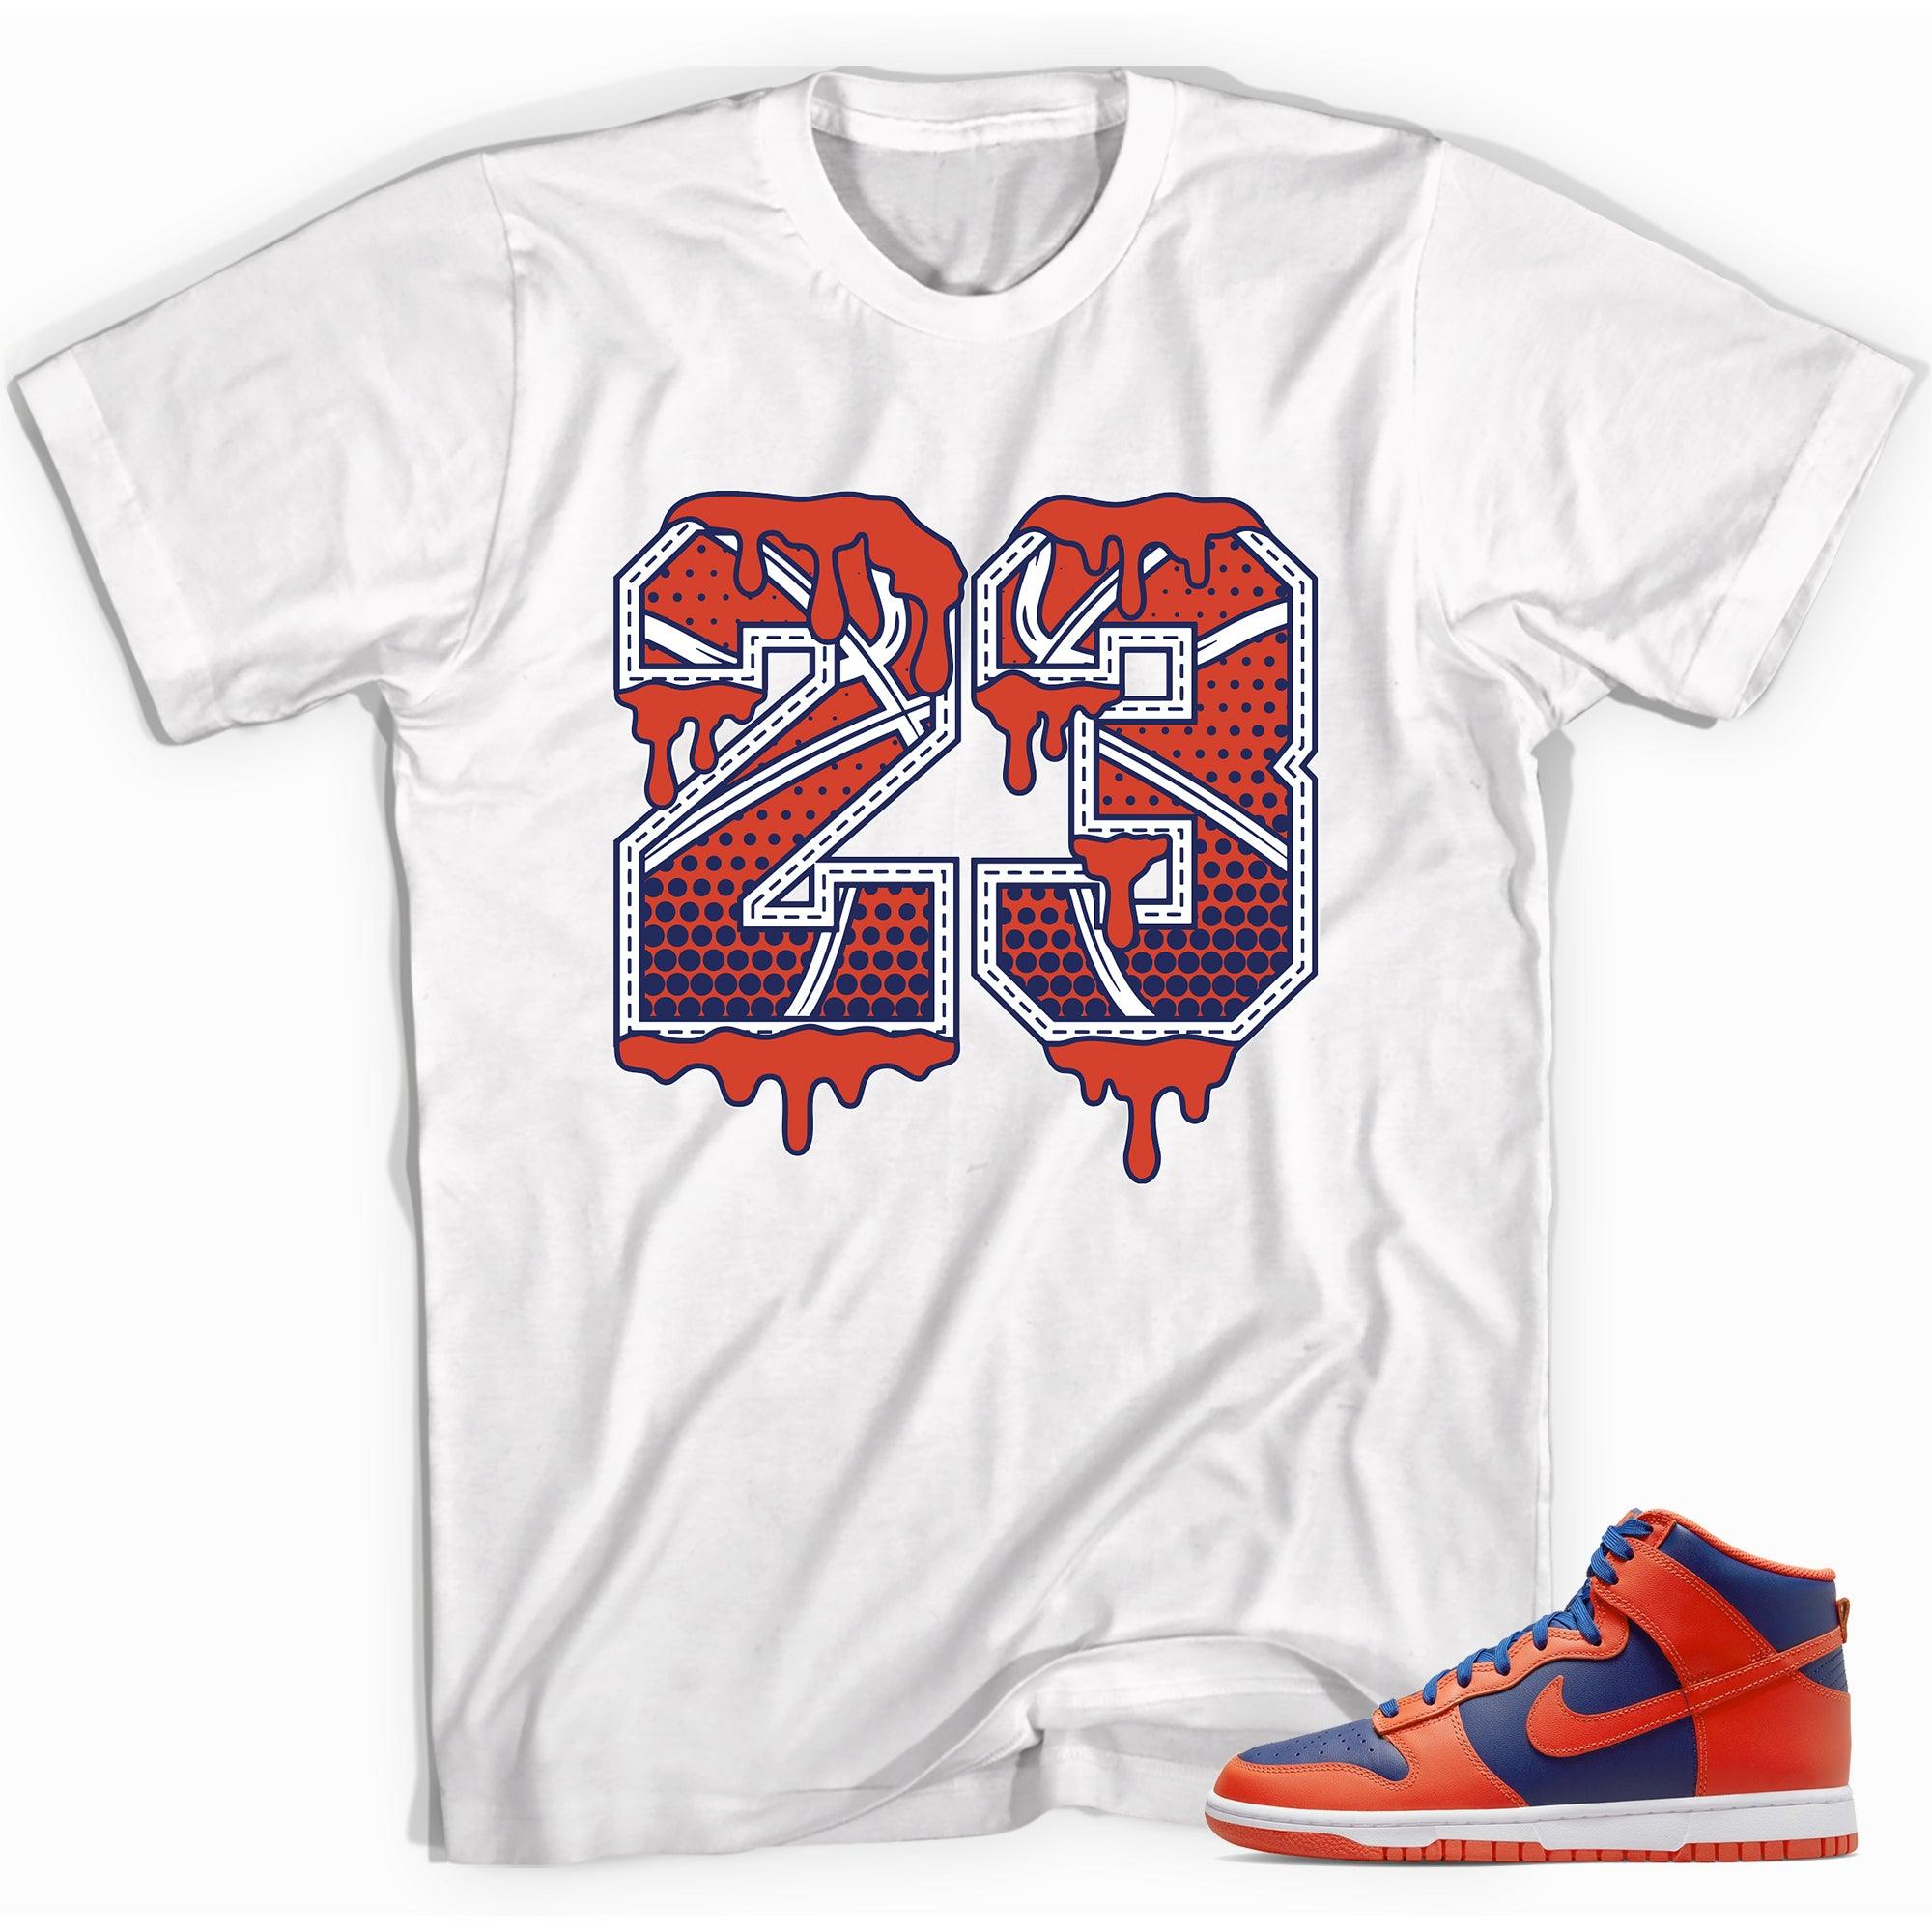 Number 23 Ball Shirt Nike Dunk High Knicks photo